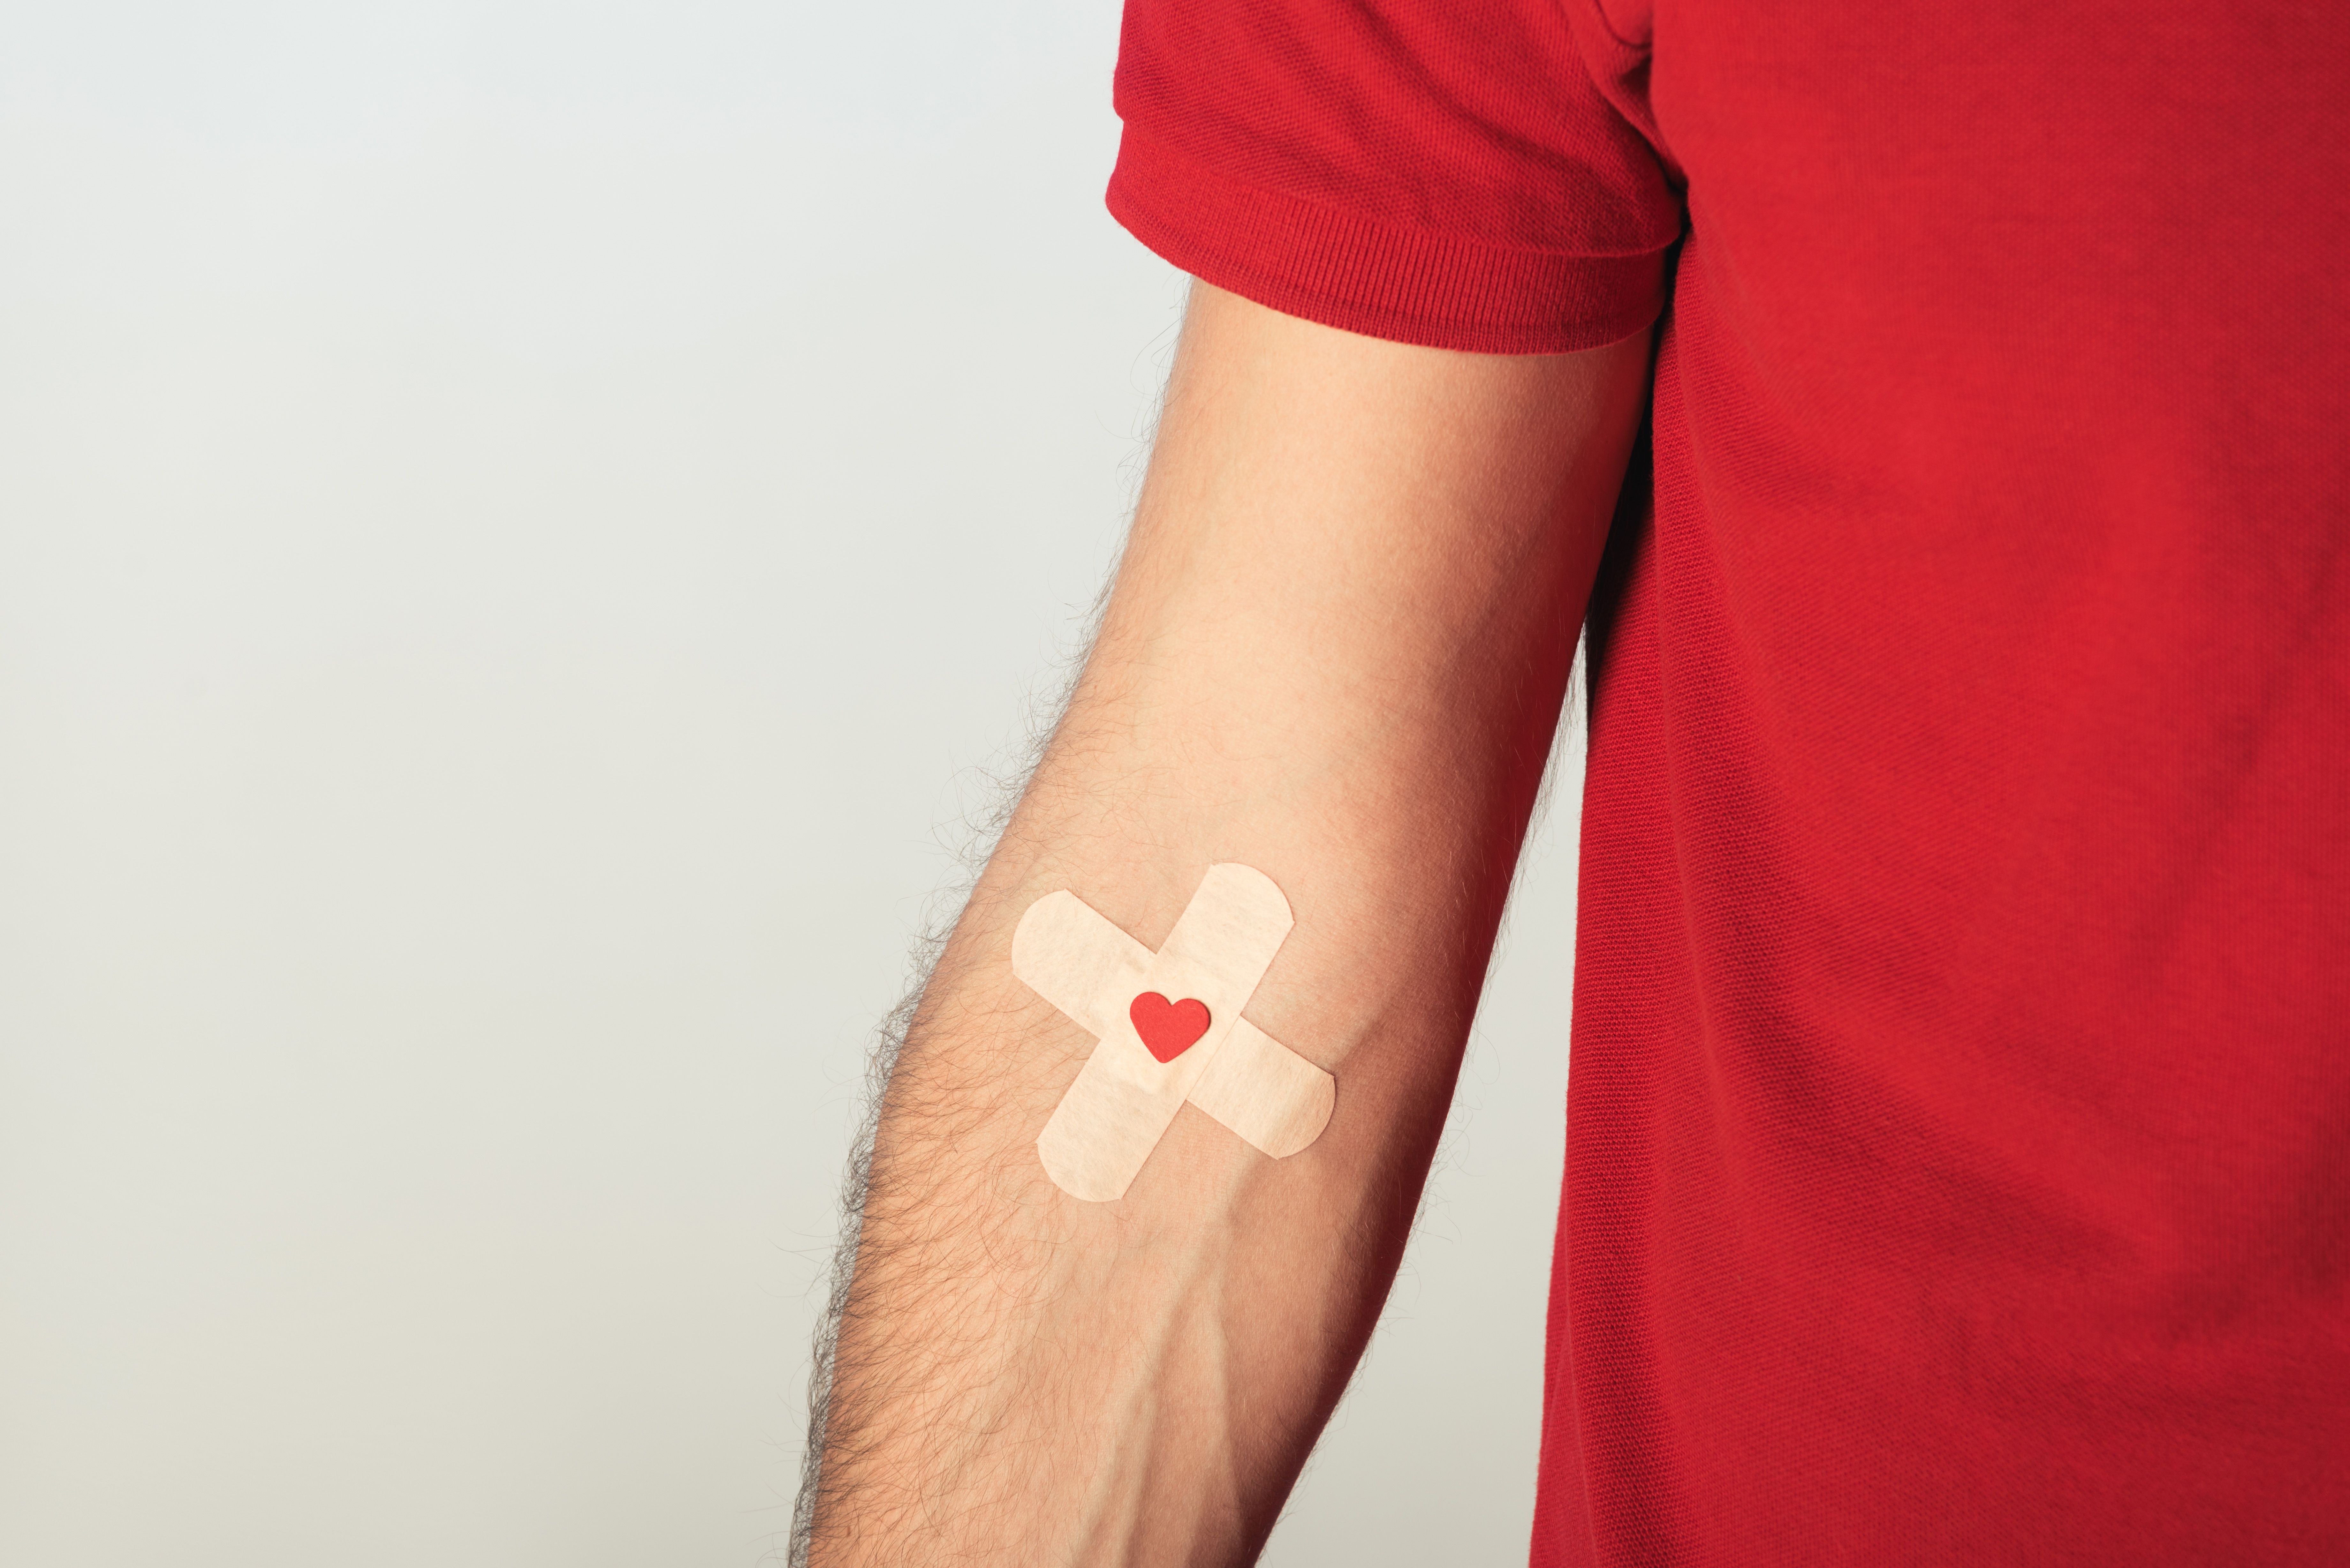 Patient who donated blood | Image credit: LIGHTFIELD STUDIOS - stock.adobe.com